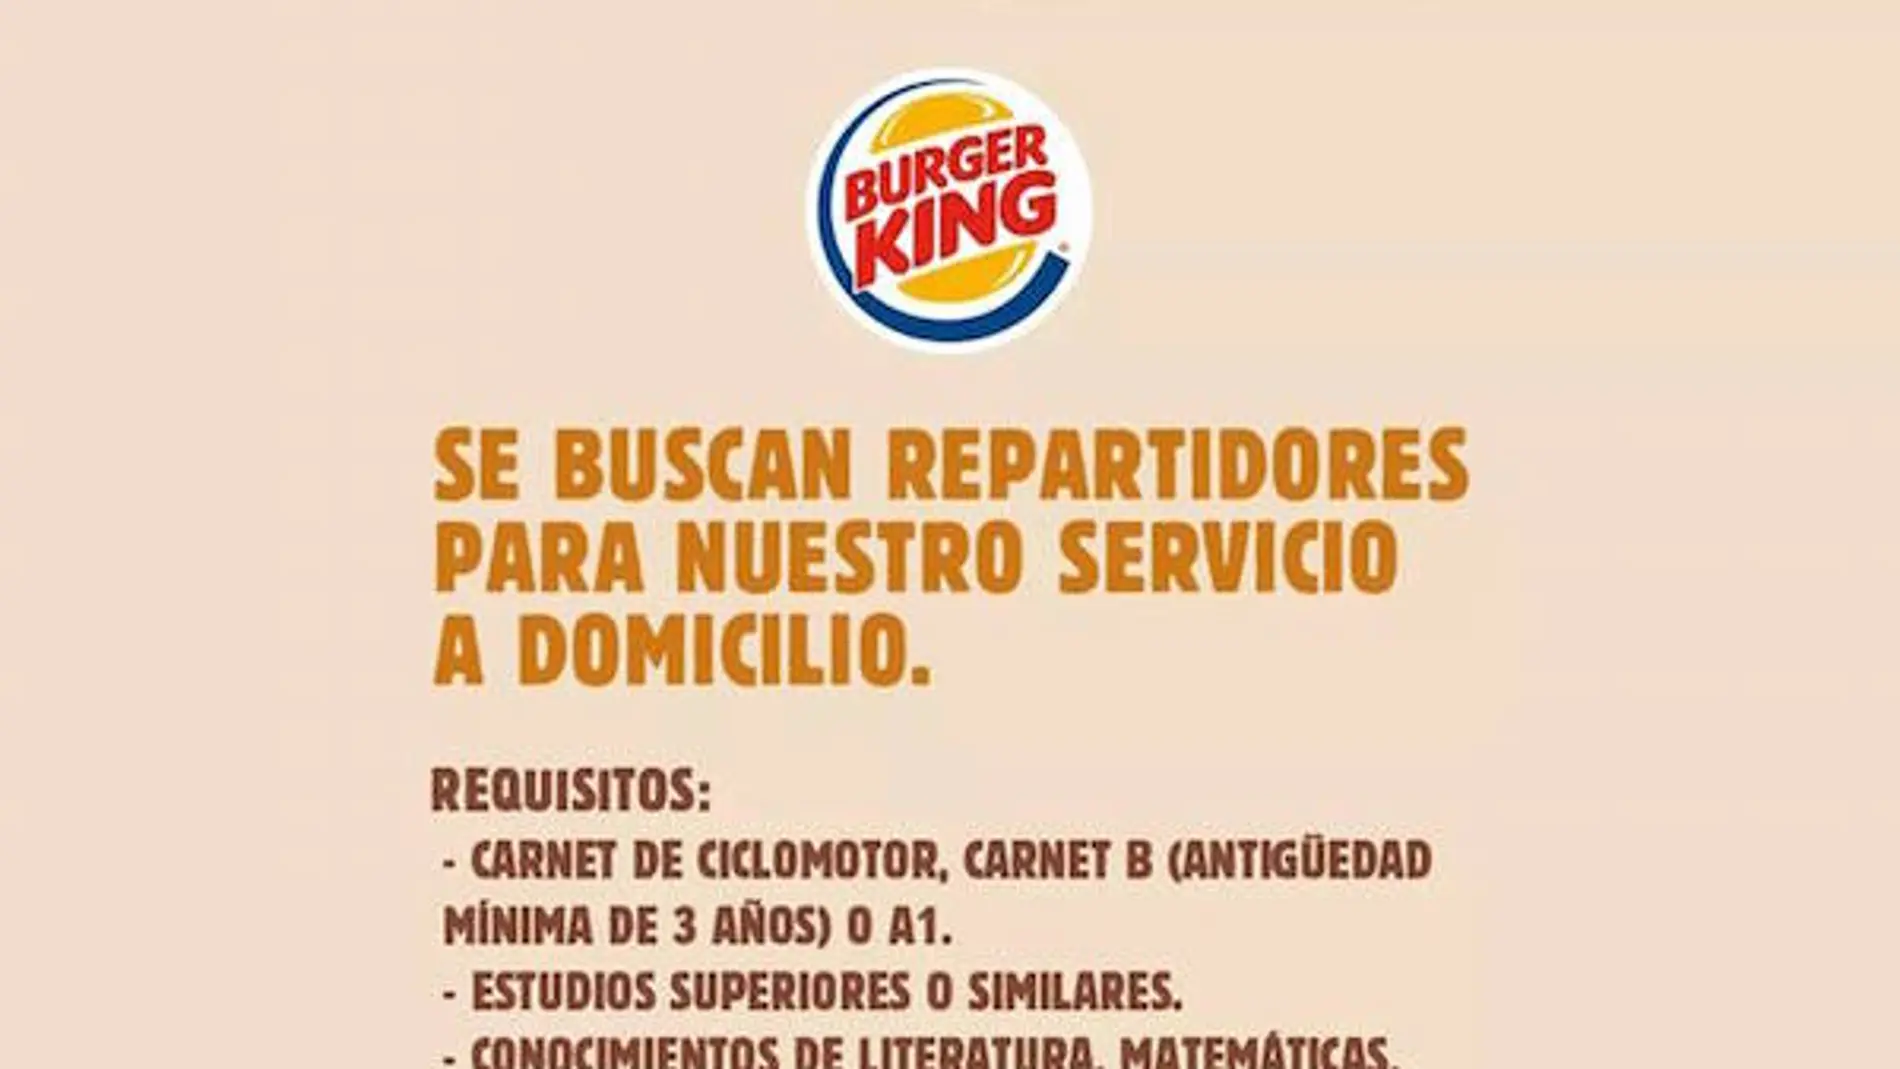 Anuncio de Burger King para contratar repartidores. 